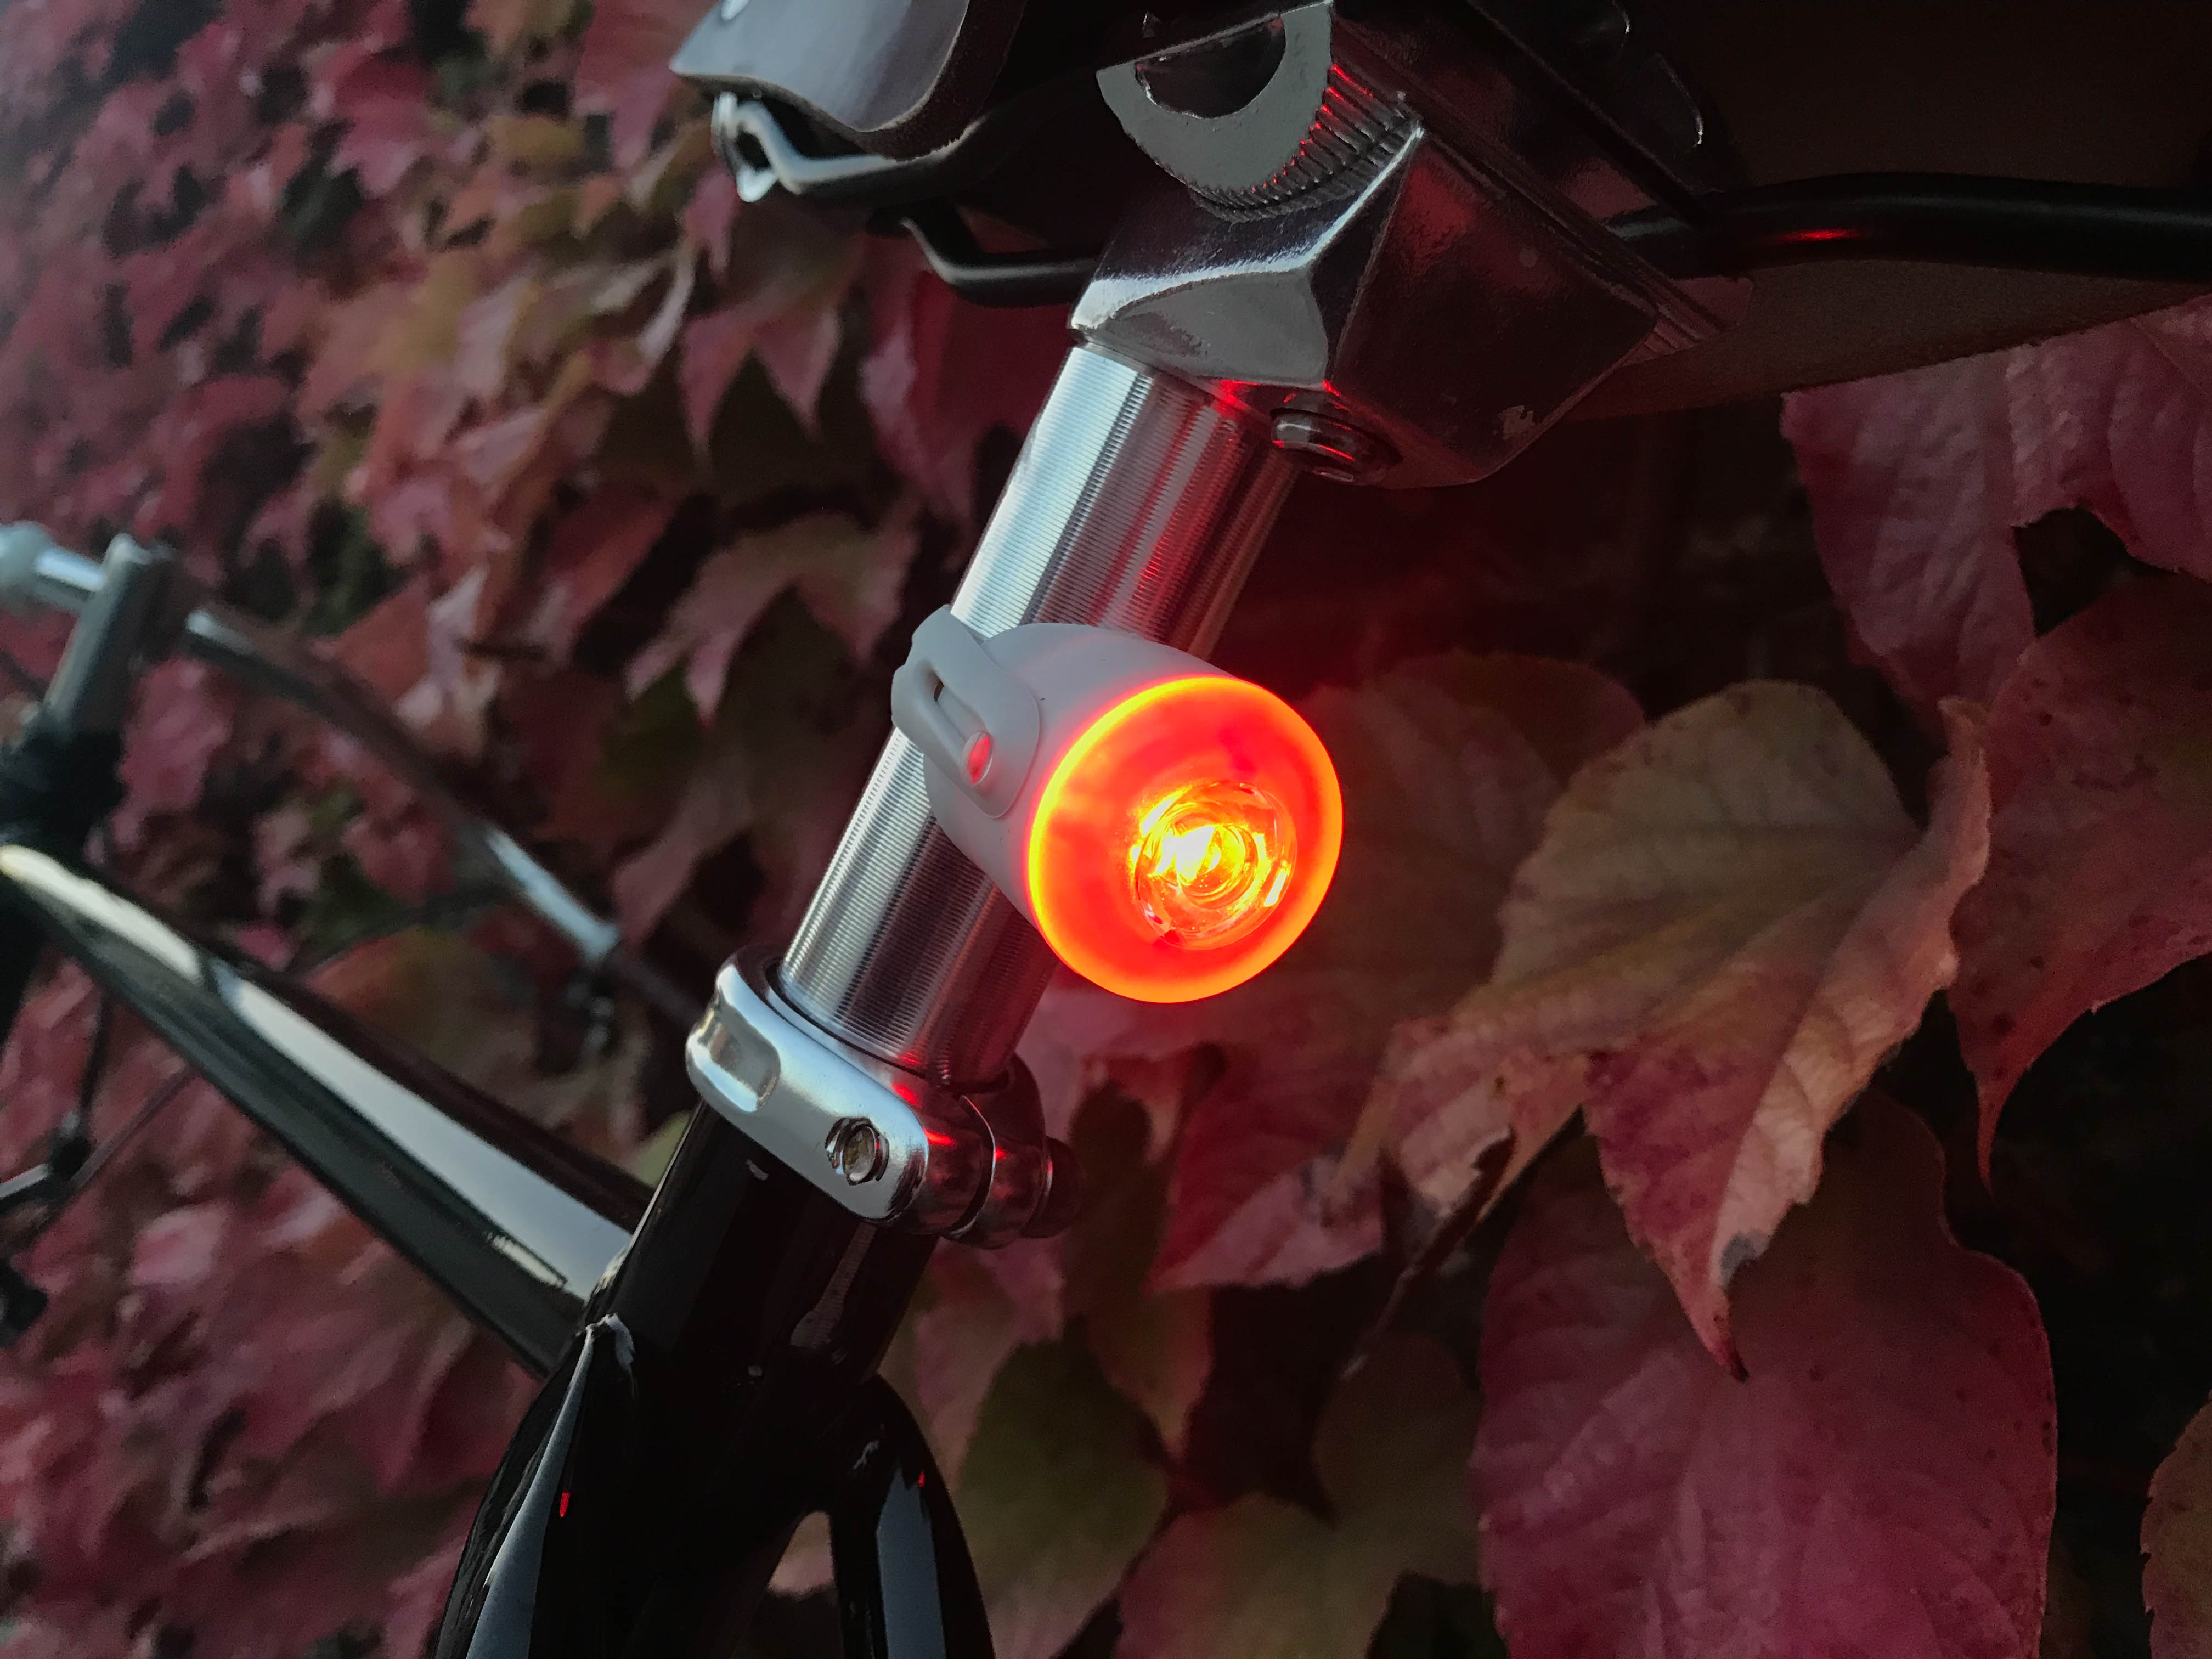 Reelight bike lights 